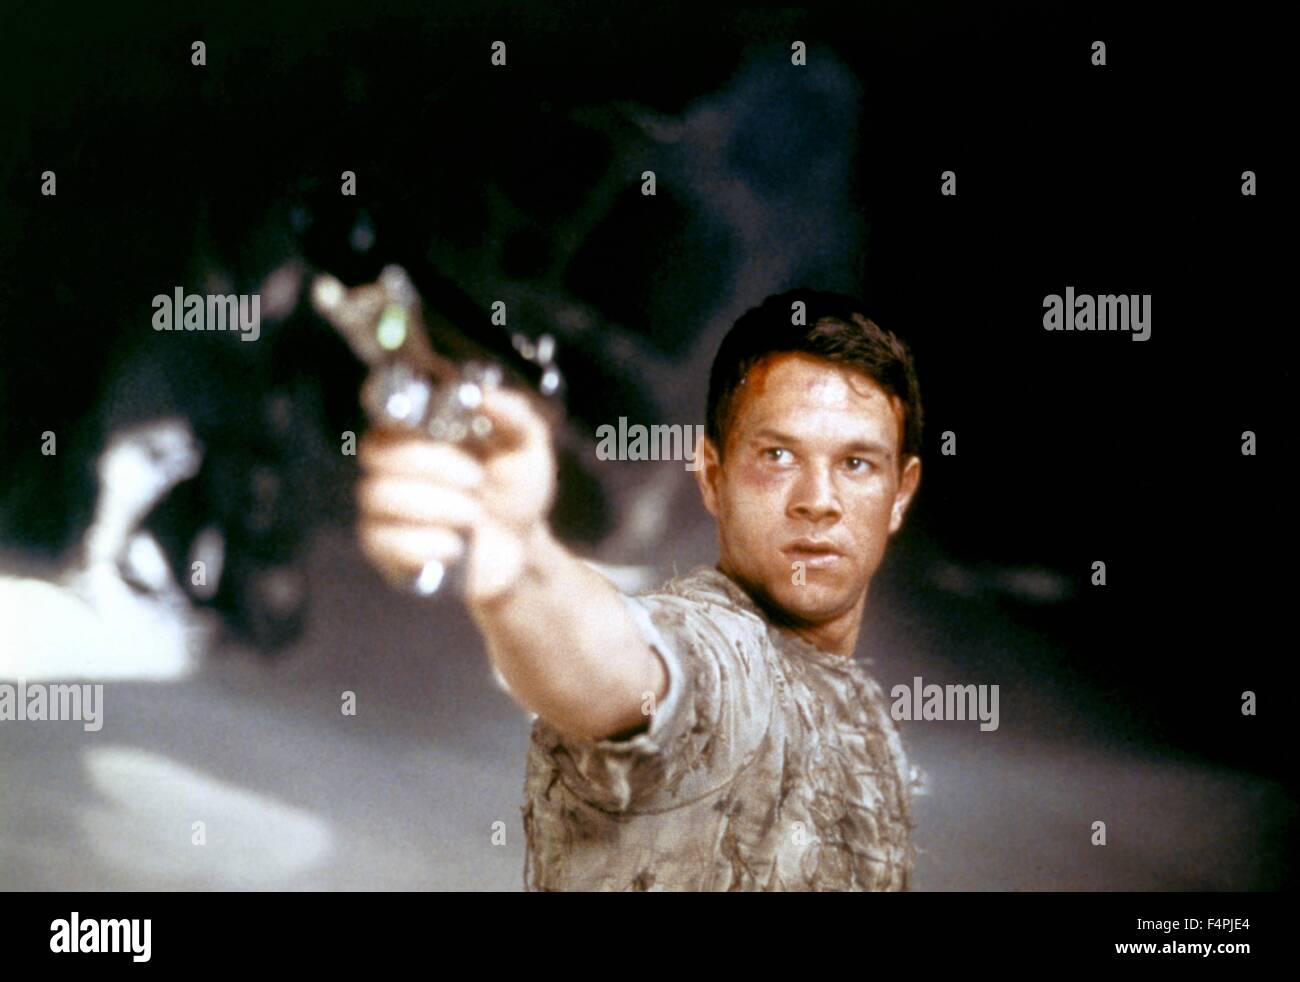 Mark Wahlberg / Planet of the Apes / 2001 directed by Tim Burton [Twentieth Century Fox Film Corpo] Stock Photo